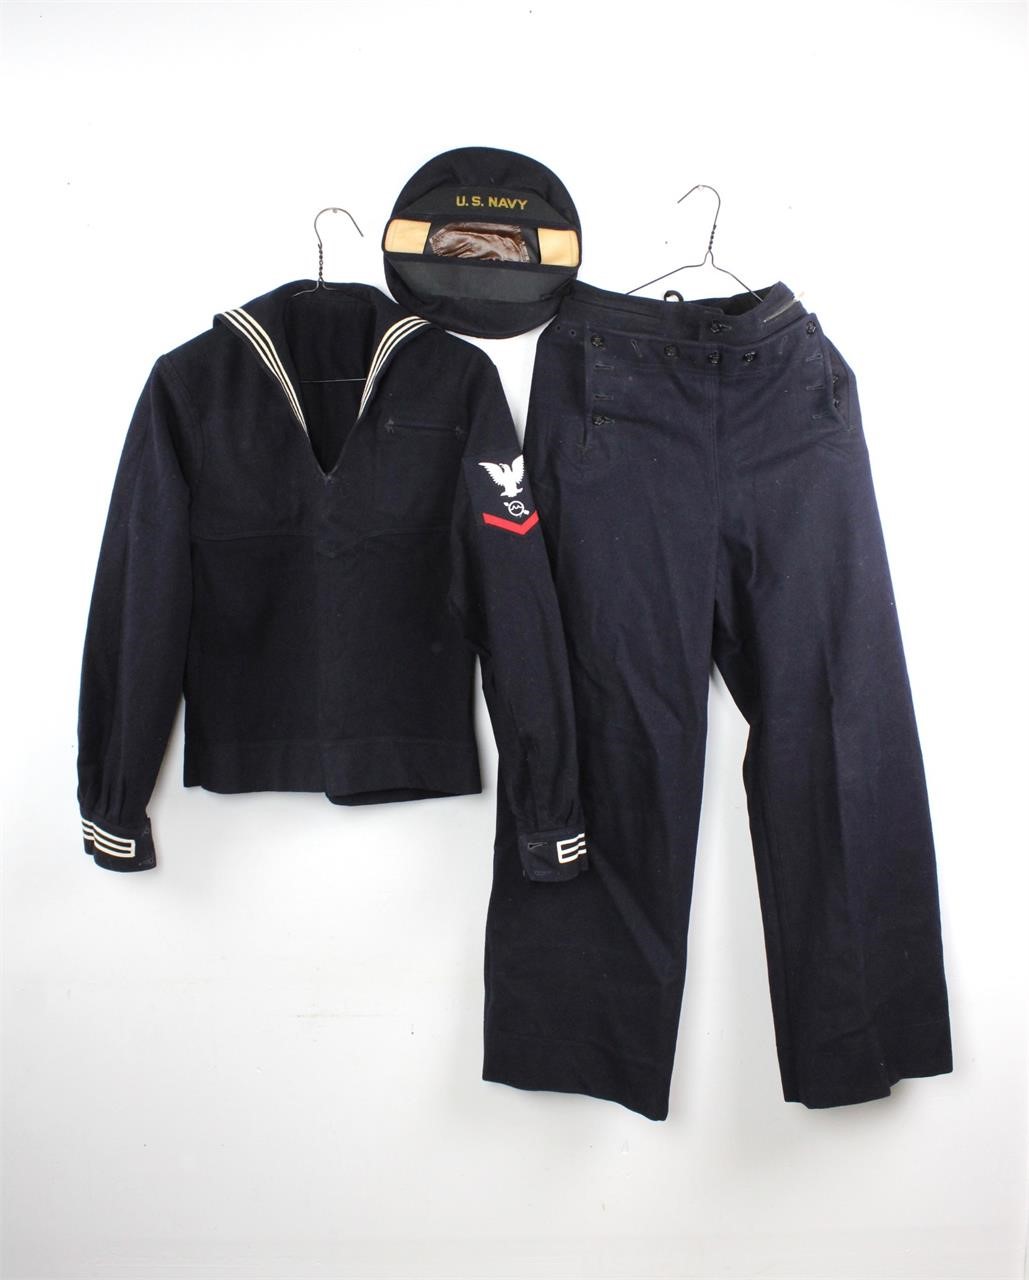 Vintage U.S. Navy Uniform Naval Clothing Factory